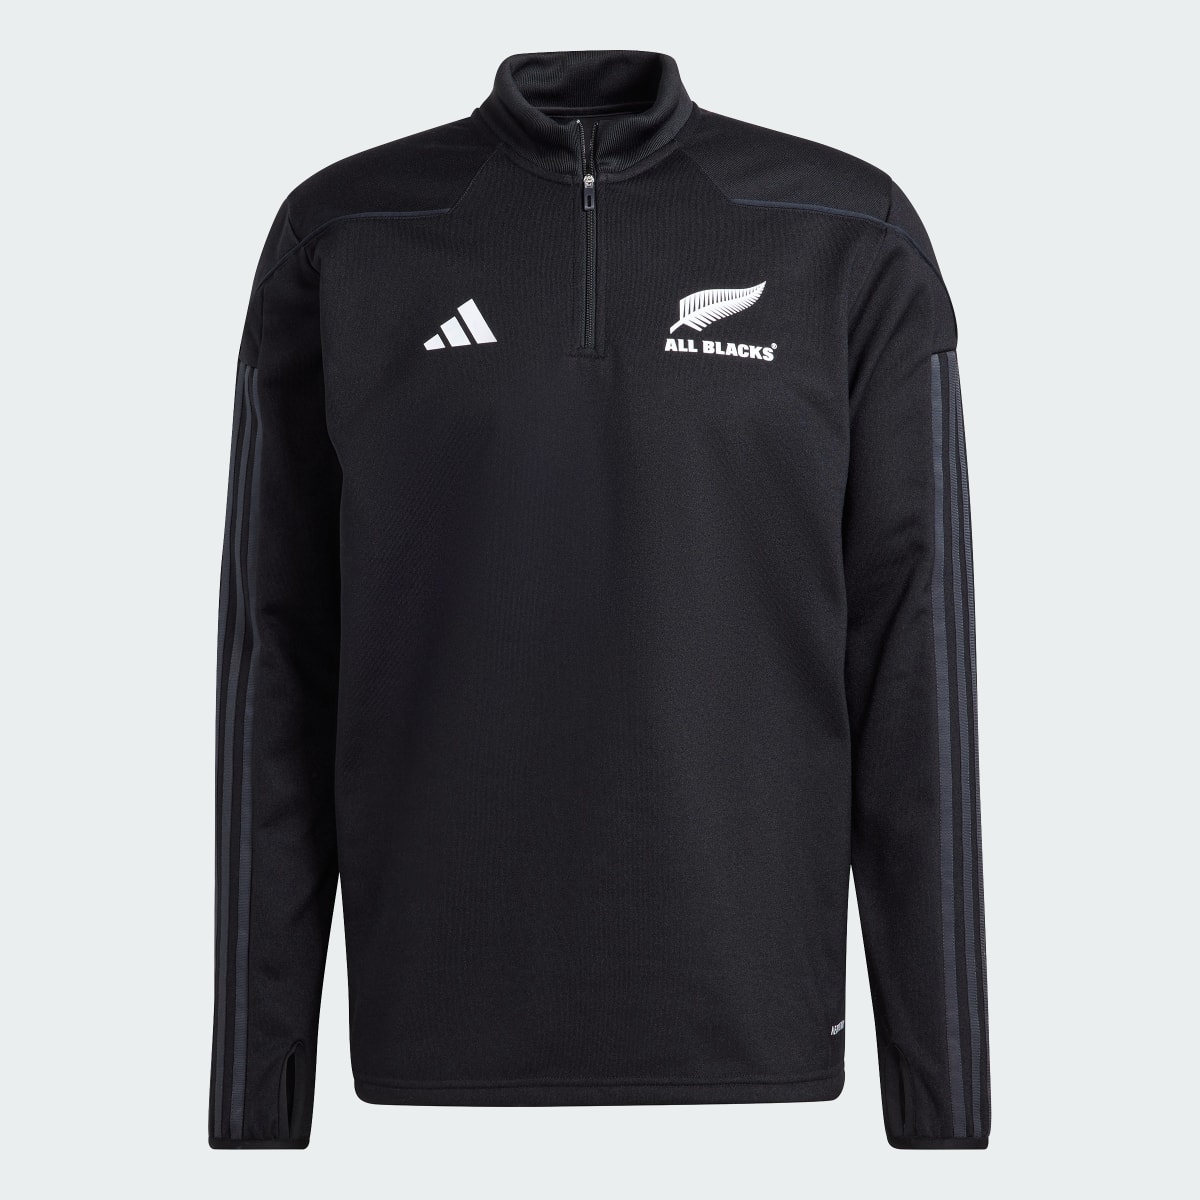 Adidas All Blacks AEROREADY Warming Long Sleeve Fleece Top. 5